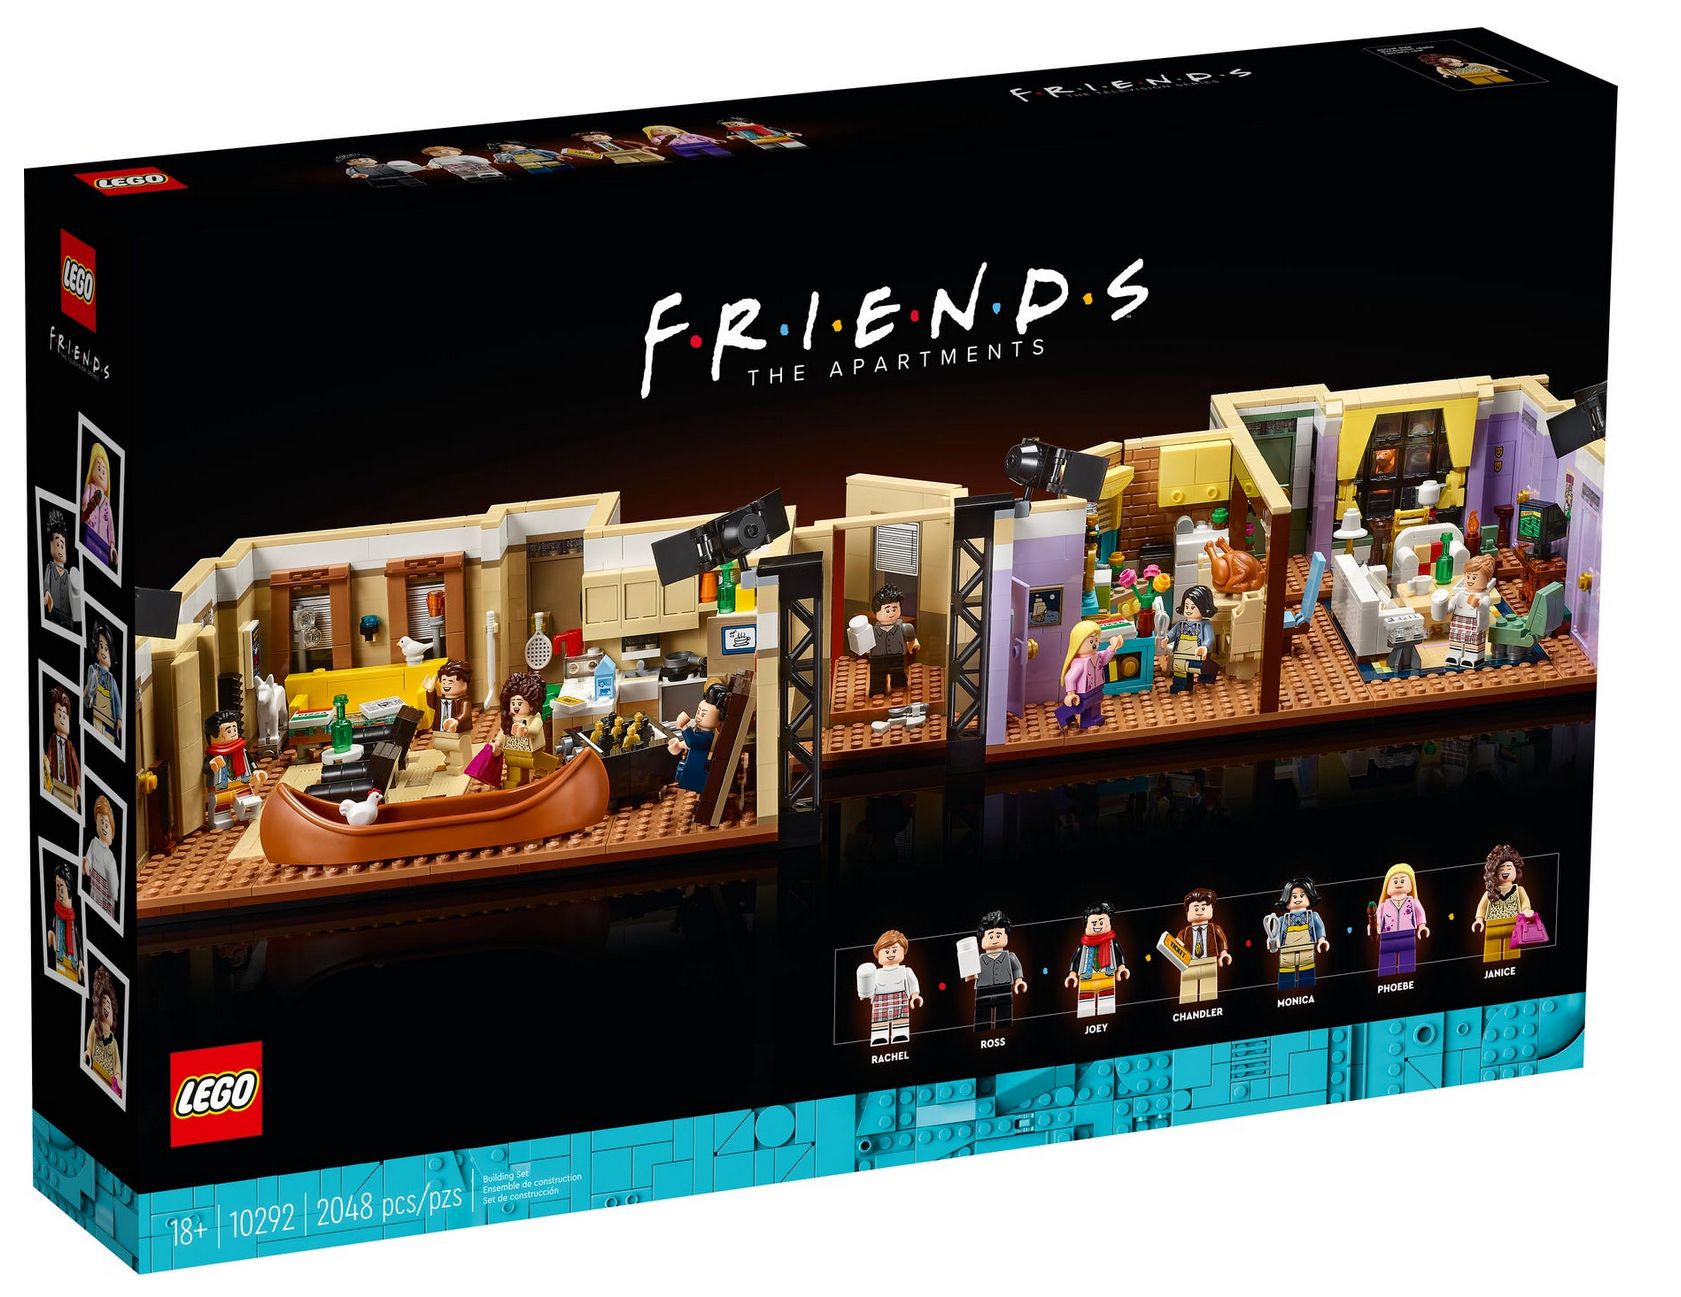 LEGO Friends The Apartments set (10292) box